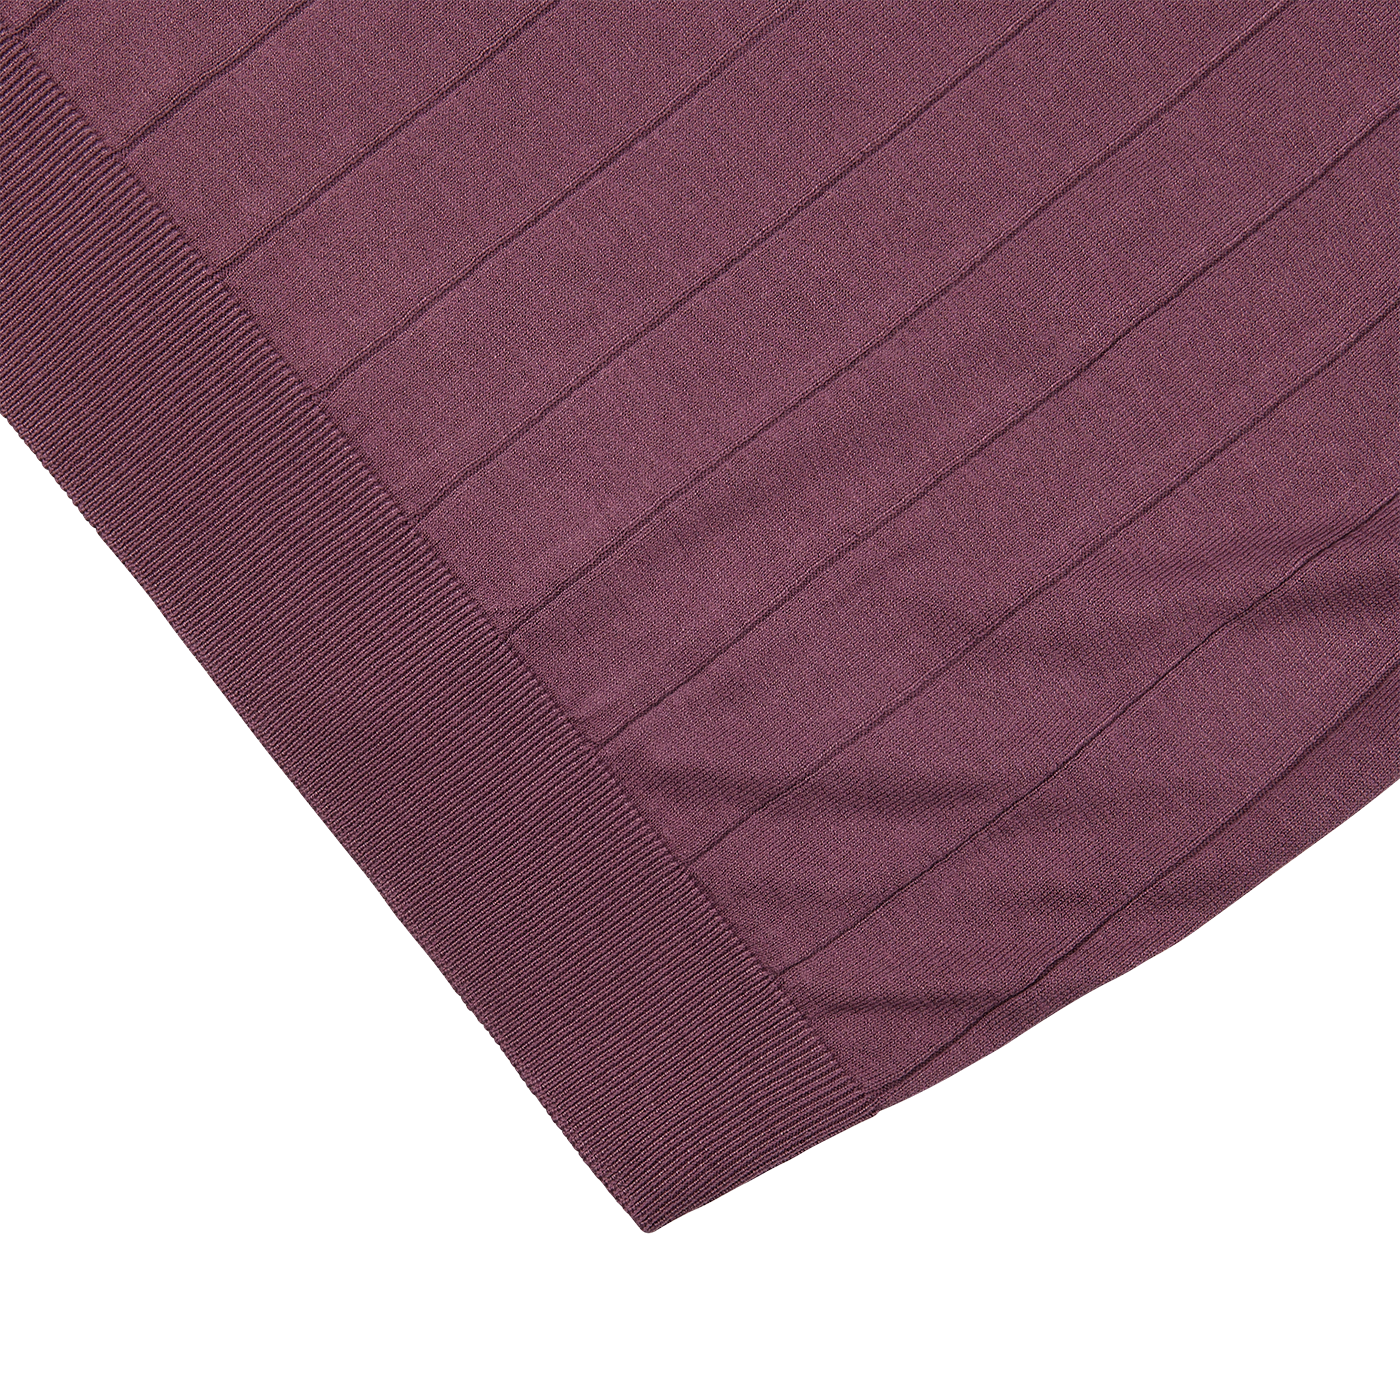 A close up of a lightweight Gran Sasso plum colored silk blanket.